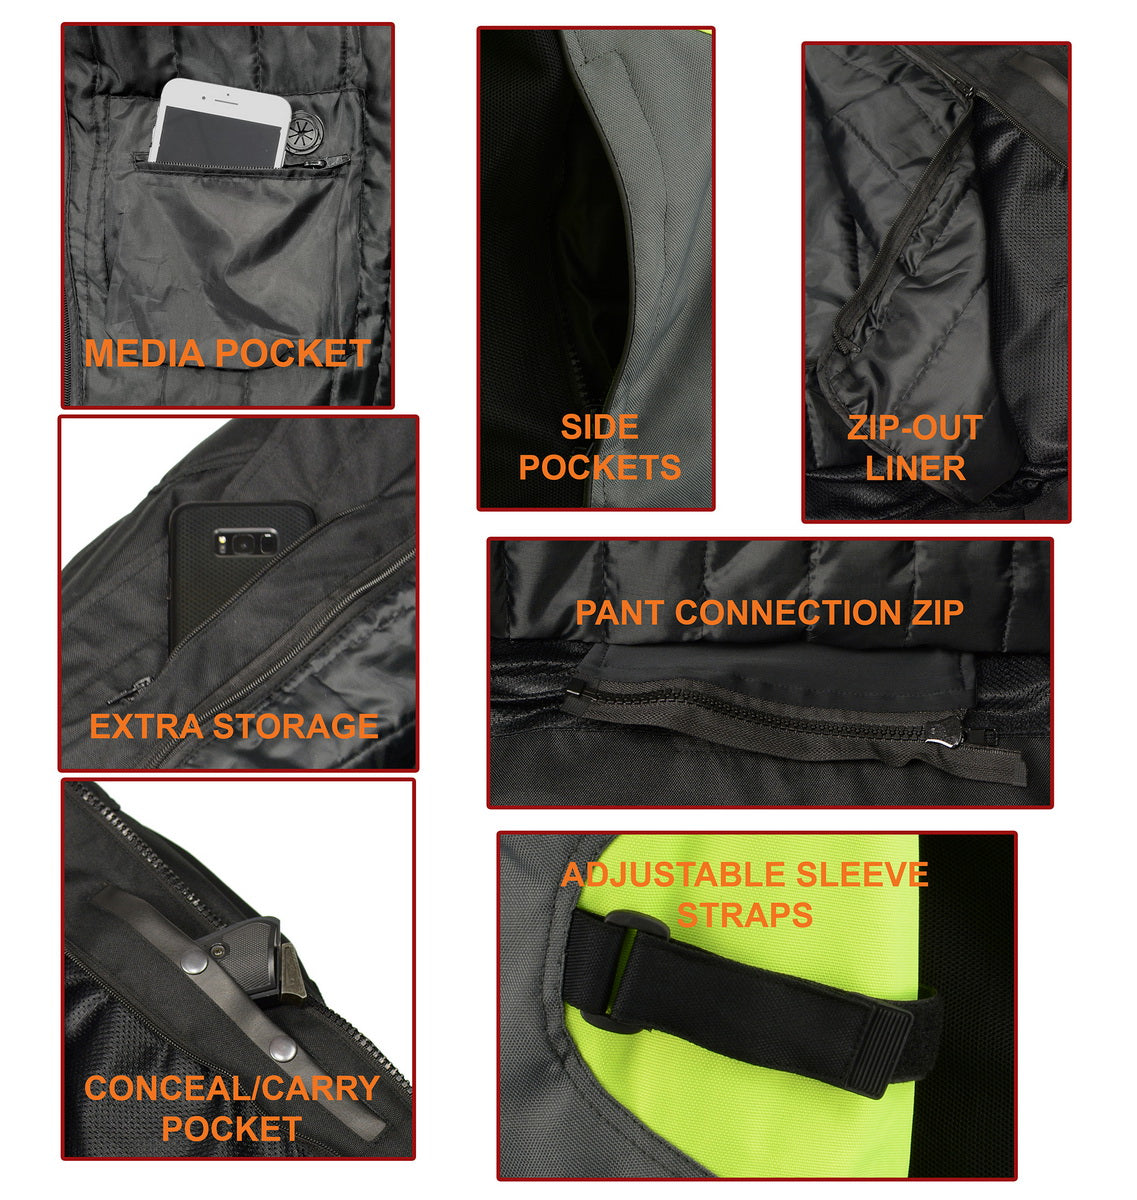 M Boss Motorcycle Apparel BOS11706 Men's Grey/Hi-Vis Orange Nylon Motorcycle Racer Jacket with Armor Protection